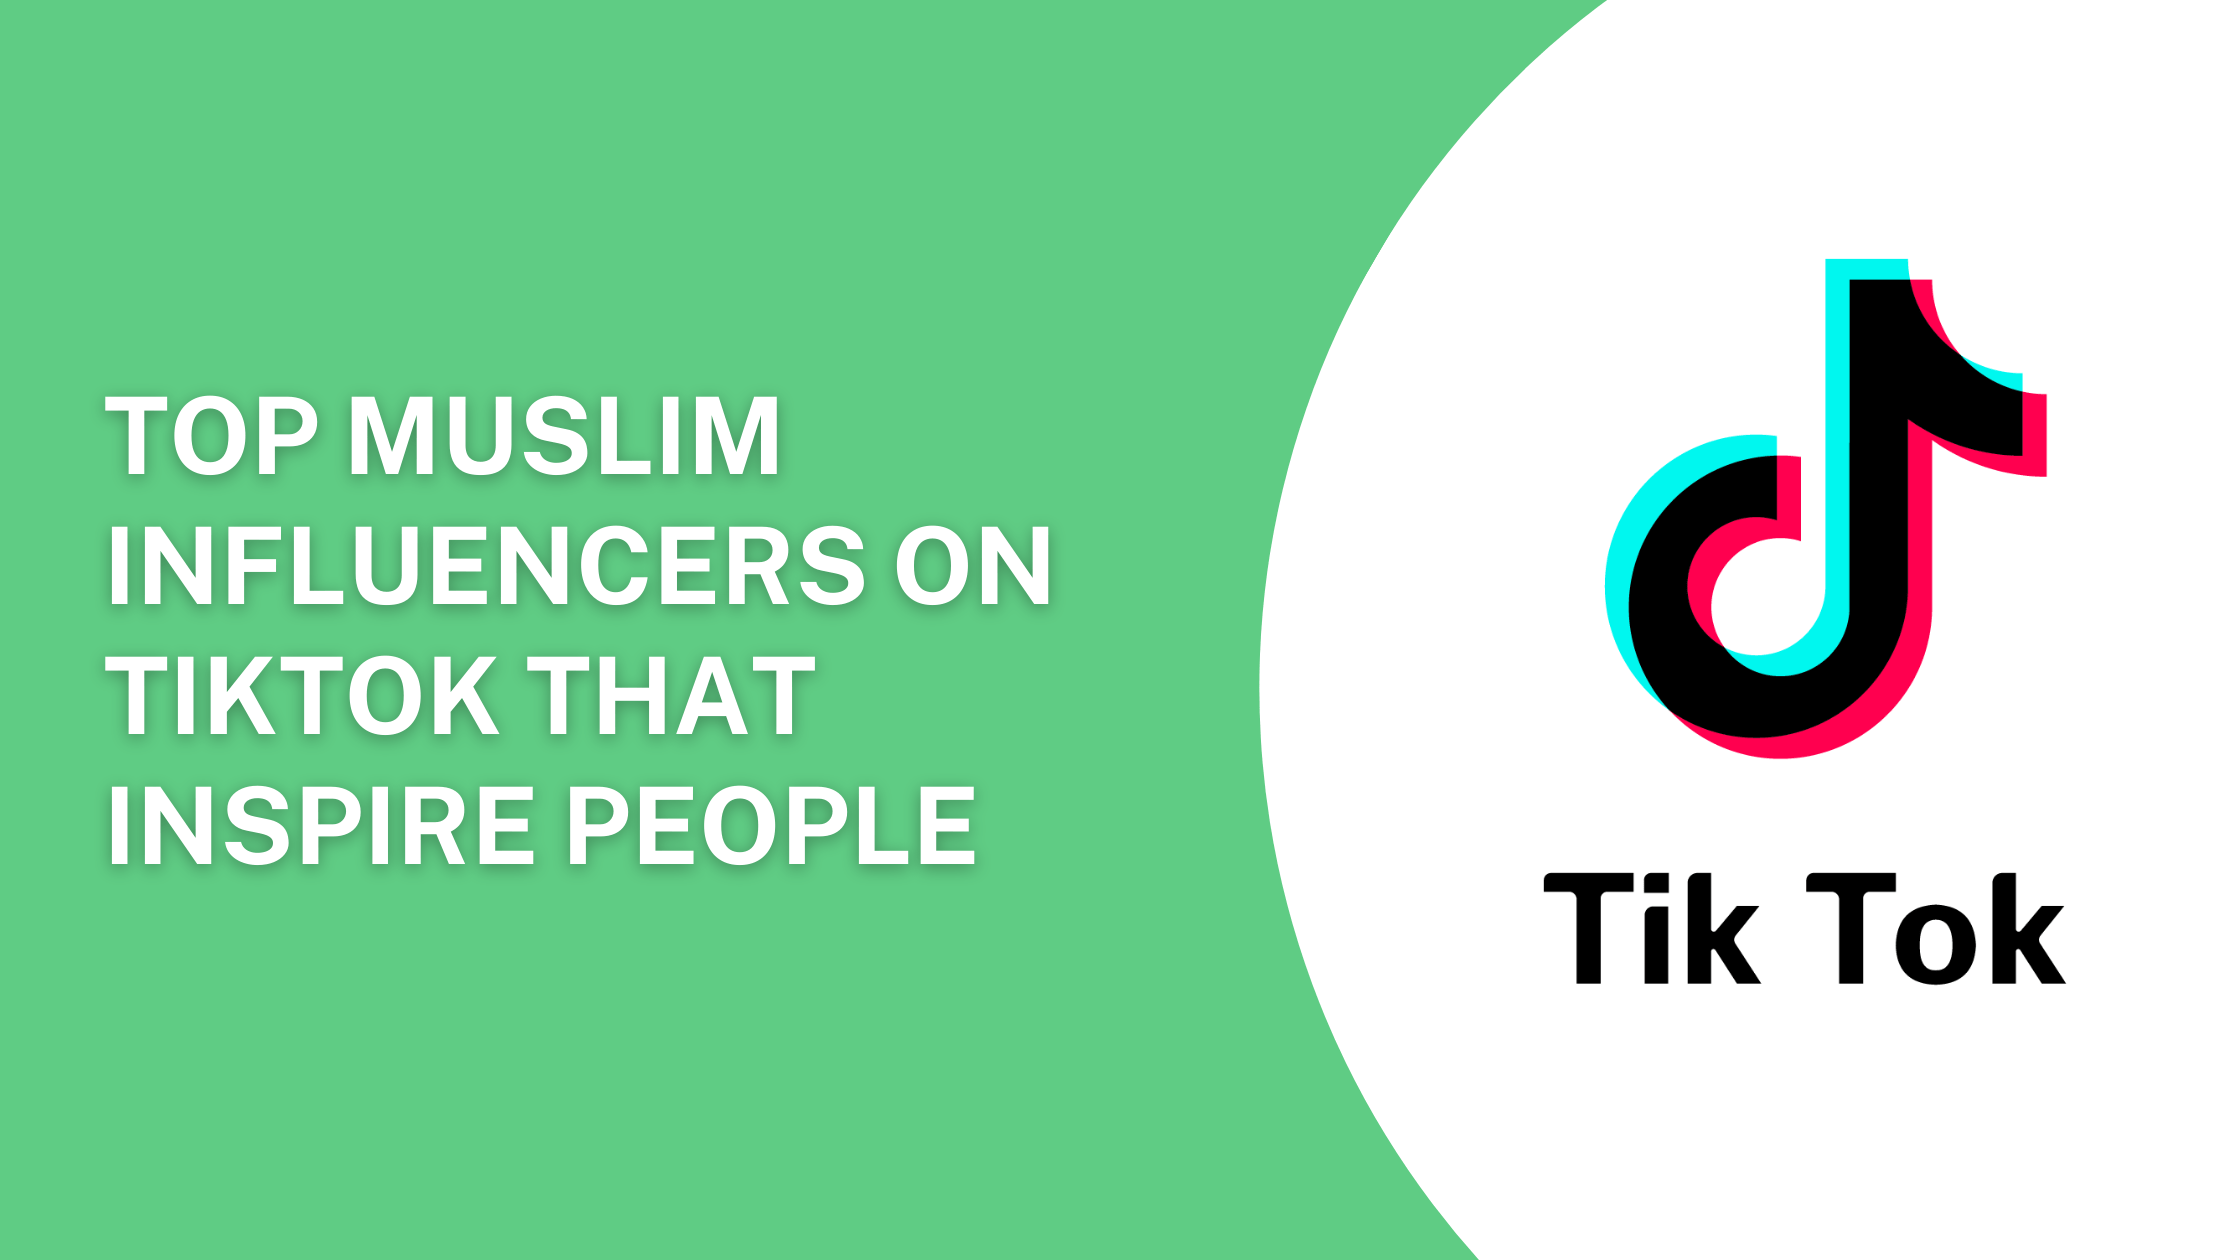 Top Muslim Influencers on TikTok that inspire people